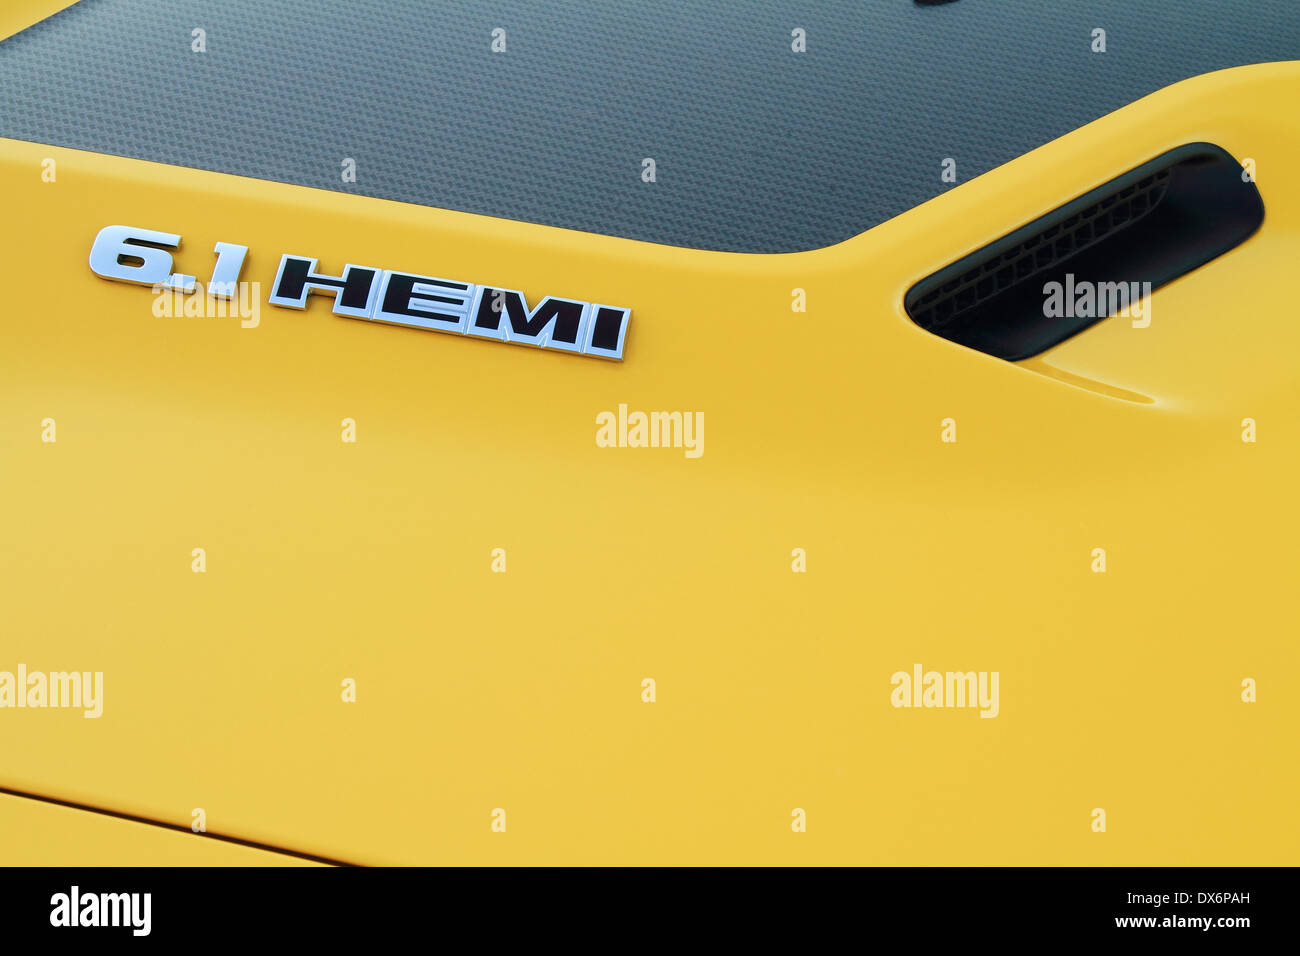 Dodge Hemi Emblem Stock Photo